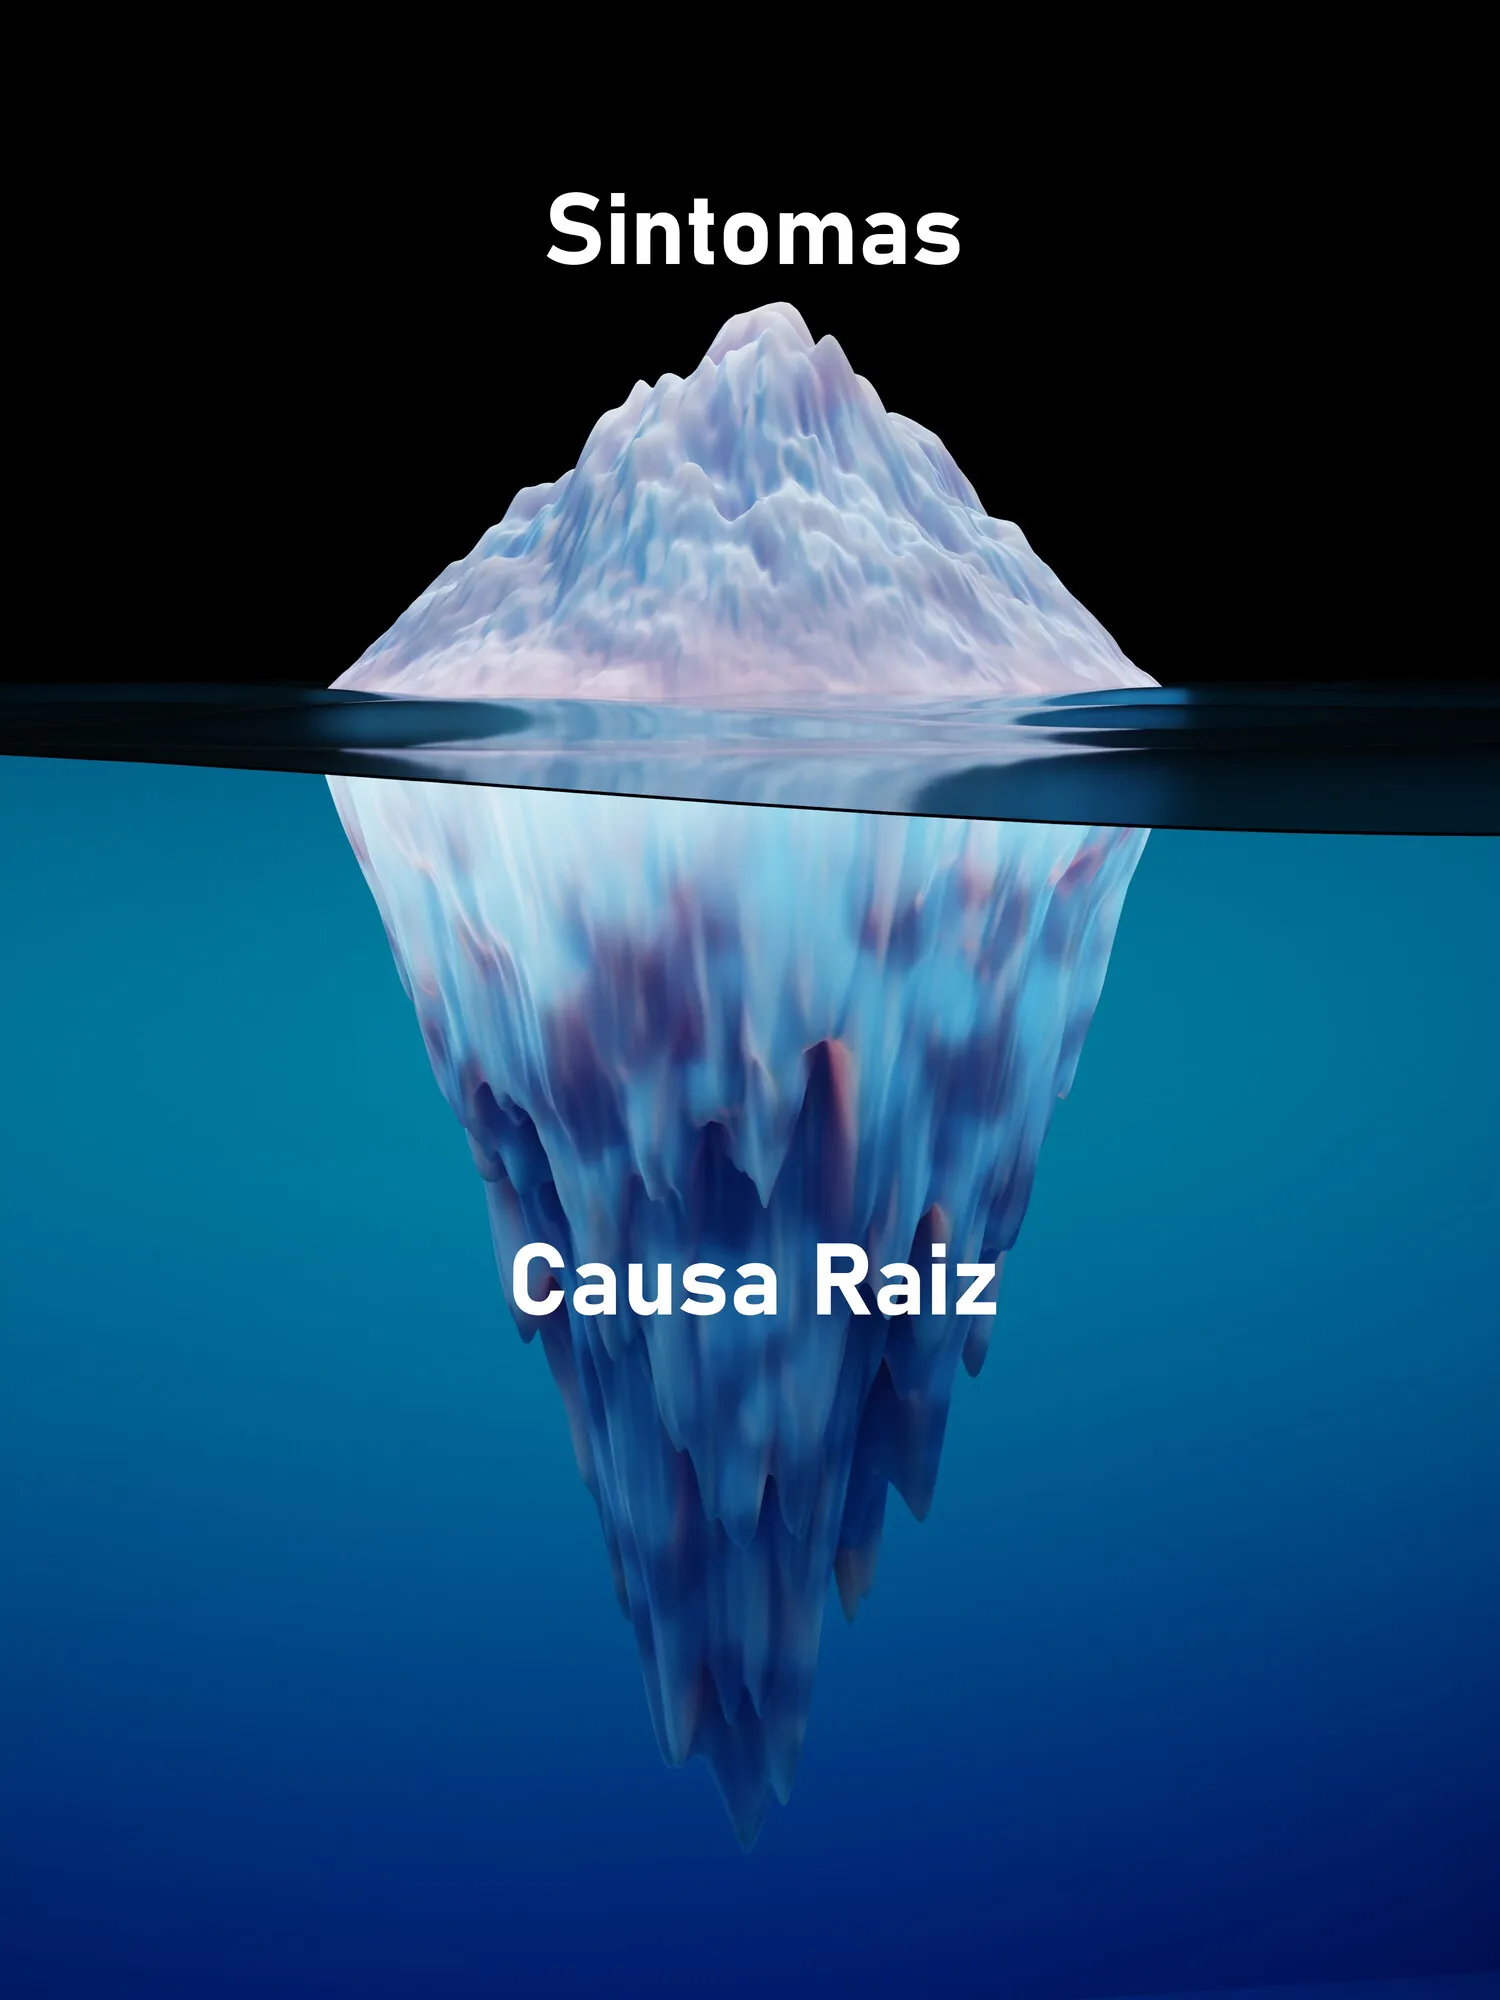 Iceberg: a ponta emersa representa os sintomas e a parte maior e submersa, a causa raiz